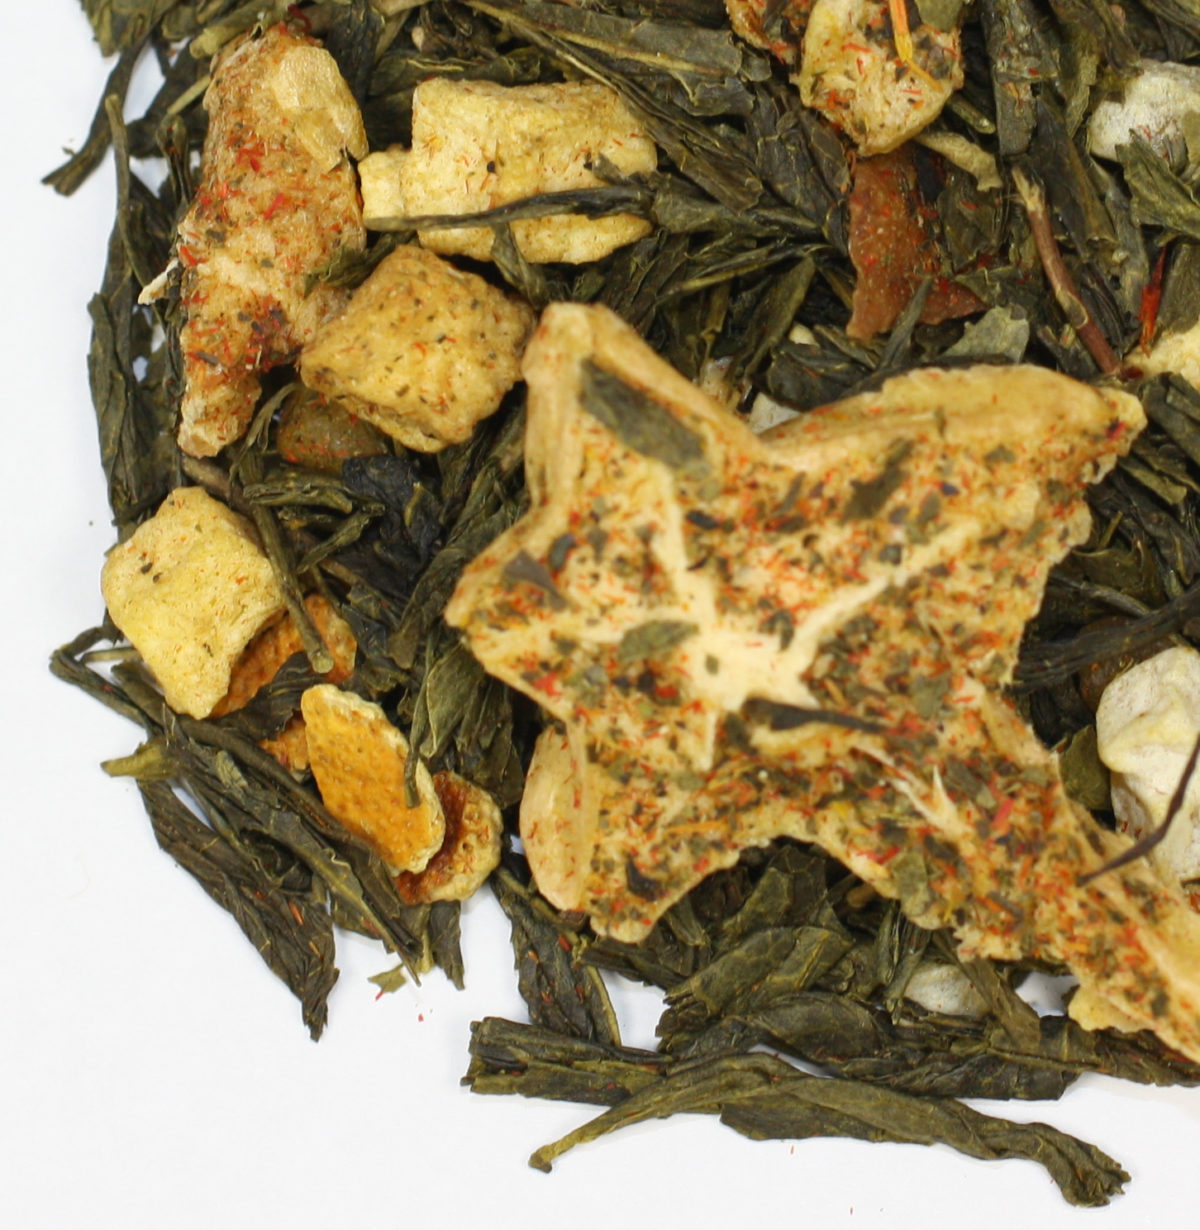 Starburst is decorative and delicious! Premium green tea, papaya, mango, and starfruit makes up this blend